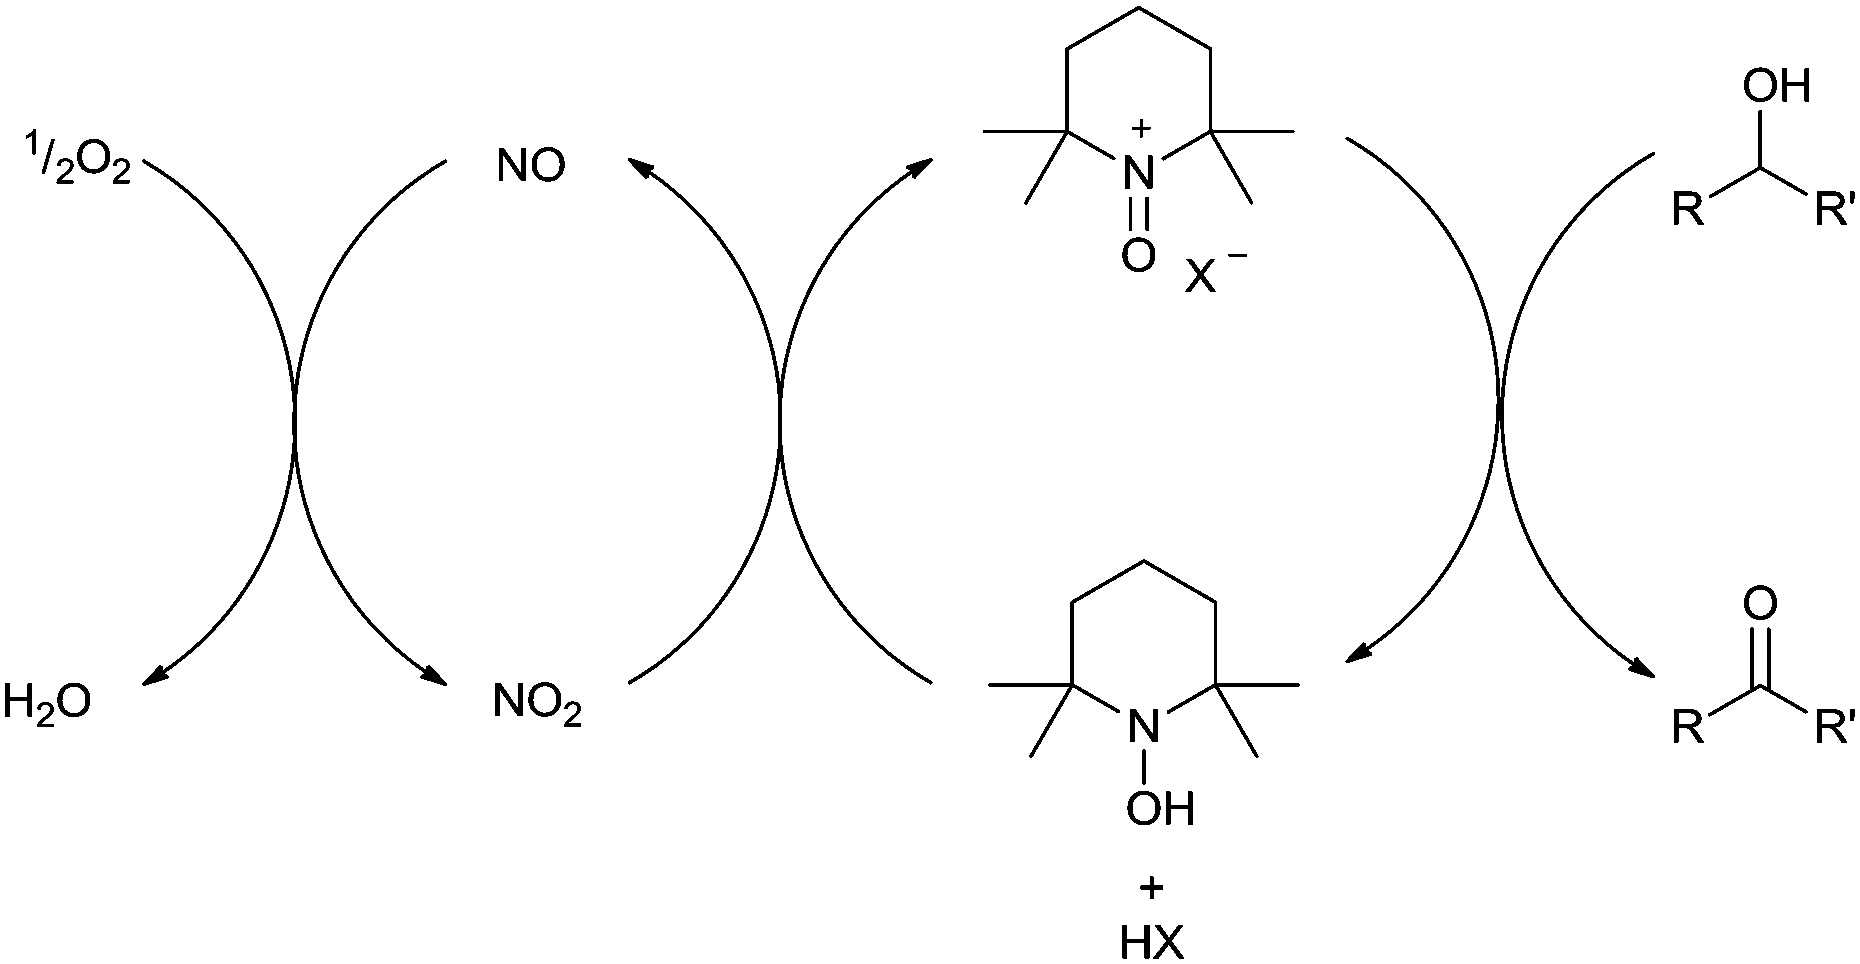 Aerobic oxidation catalysis with stable radicals - Chemical Communications  (RSC Publishing) DOI:10.1039/C3CC47081D